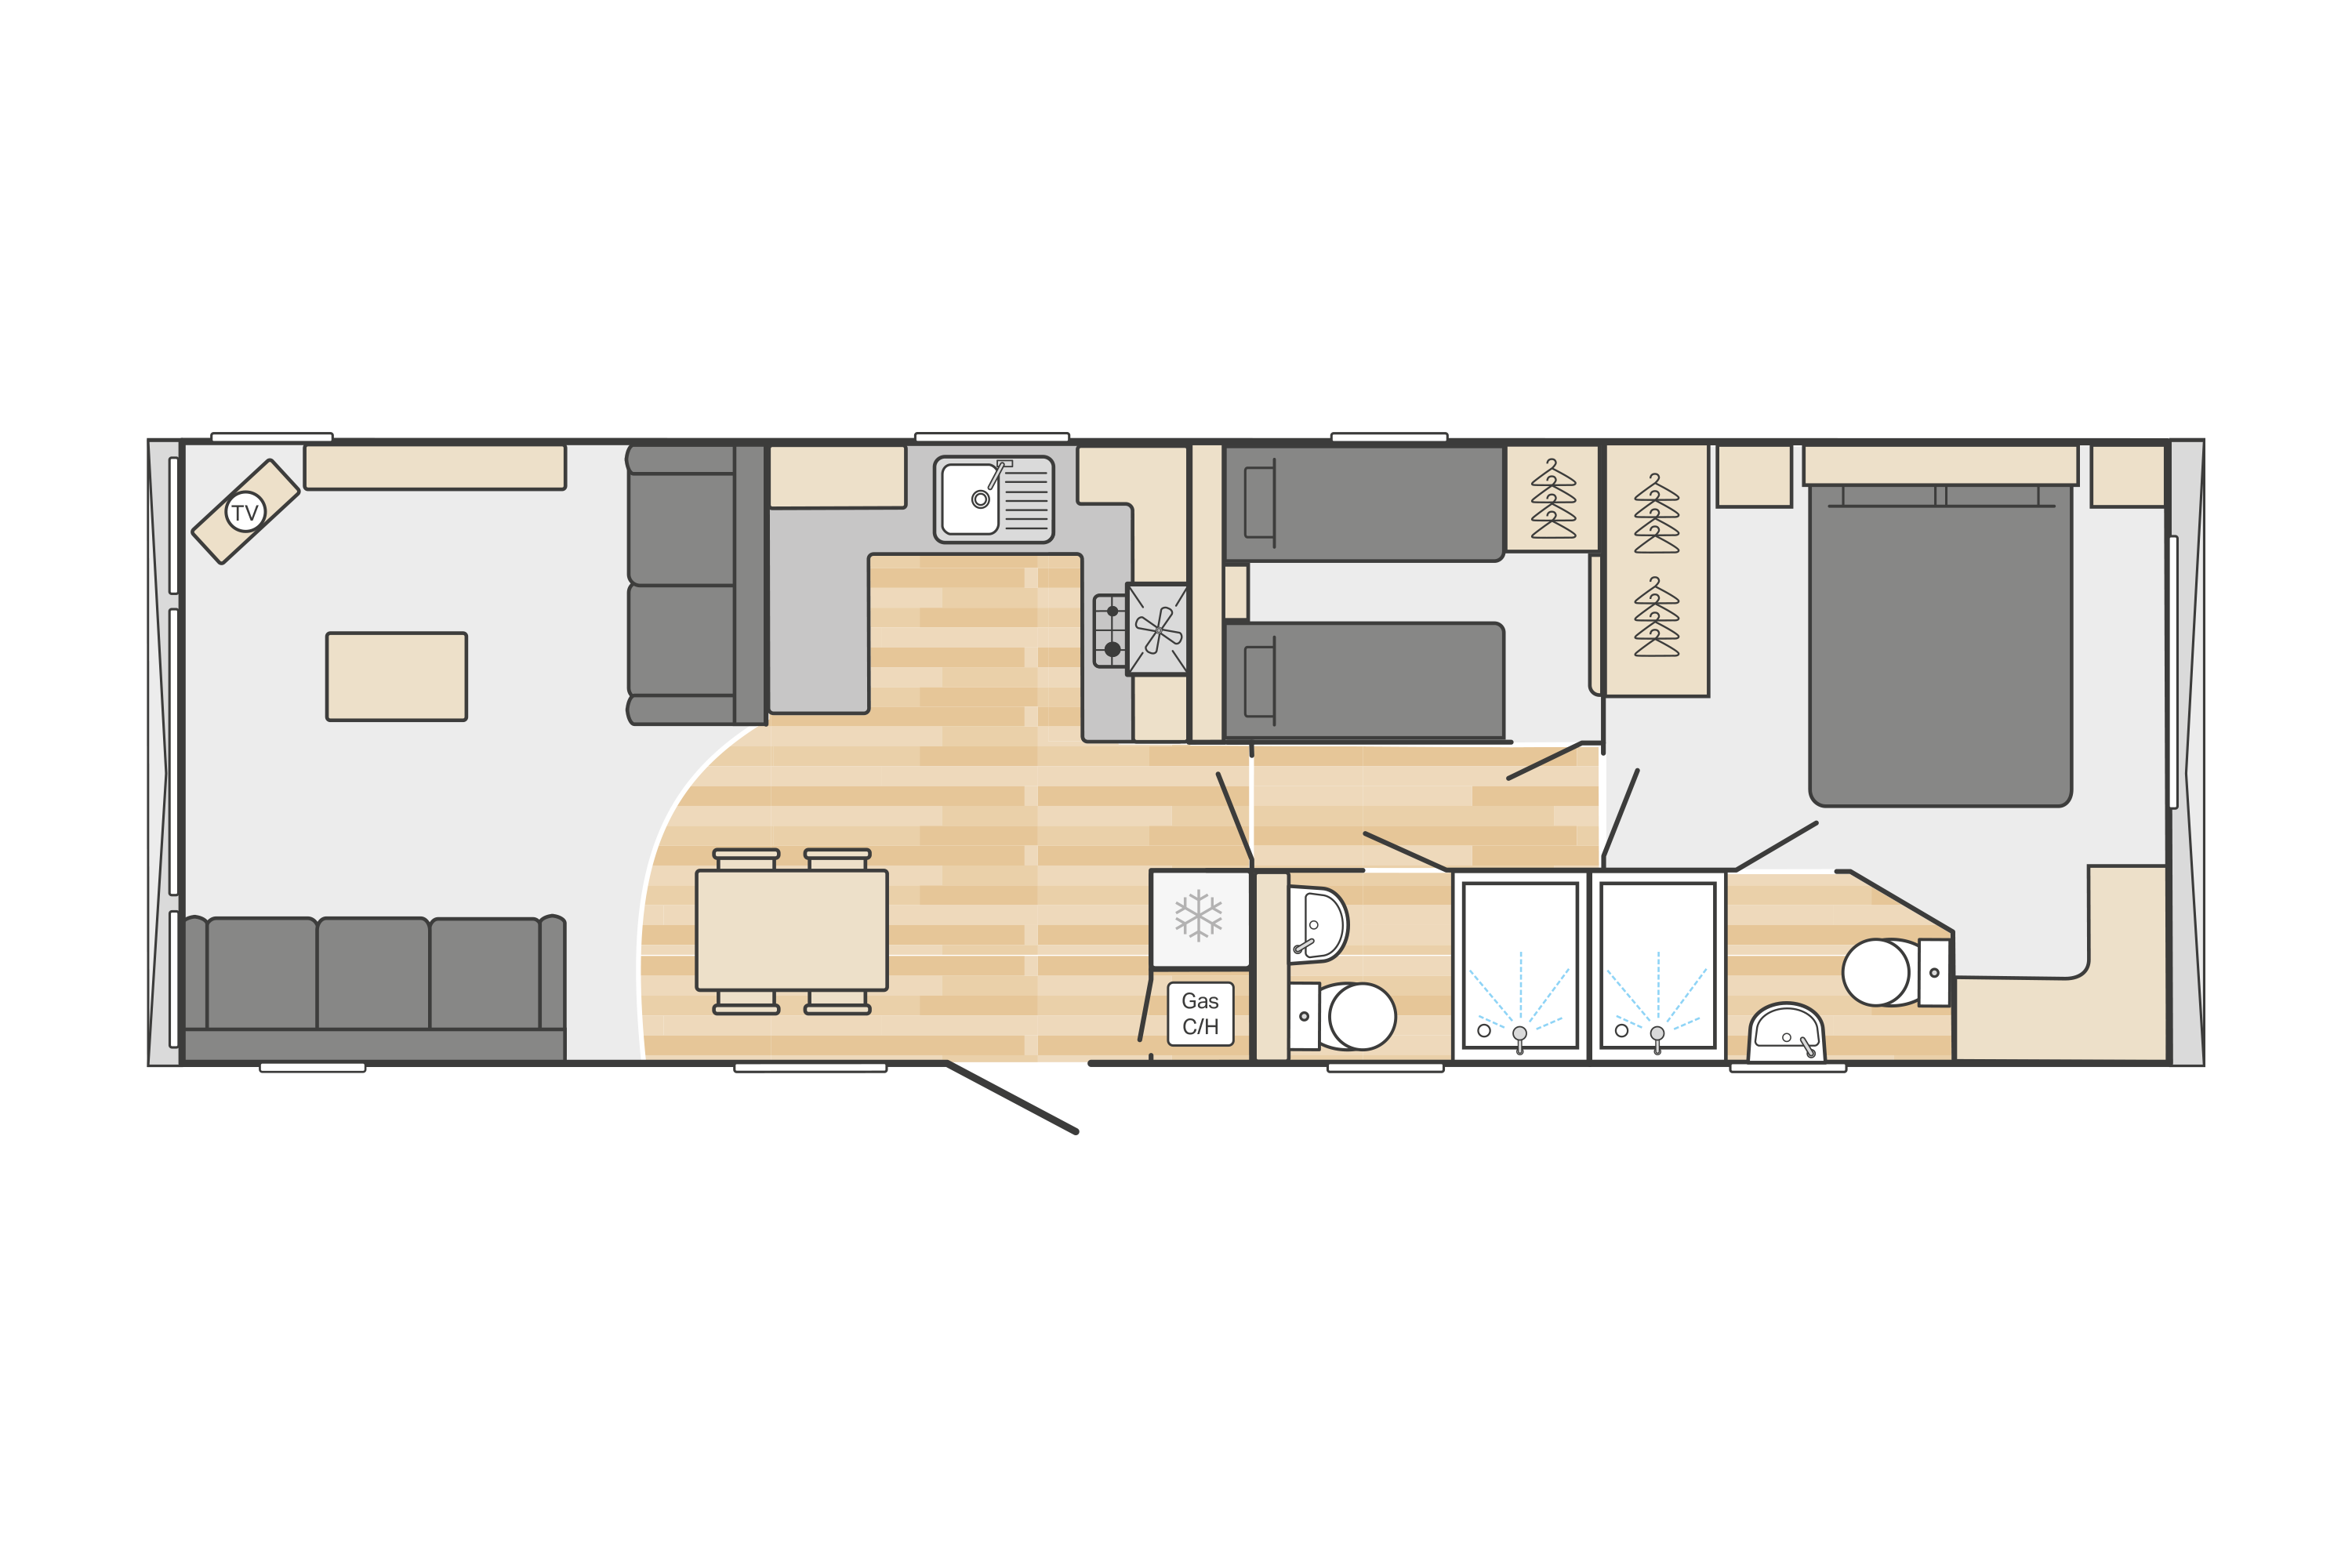 Bordeaux 38' x 12' 2 Bedroom ES floorplan